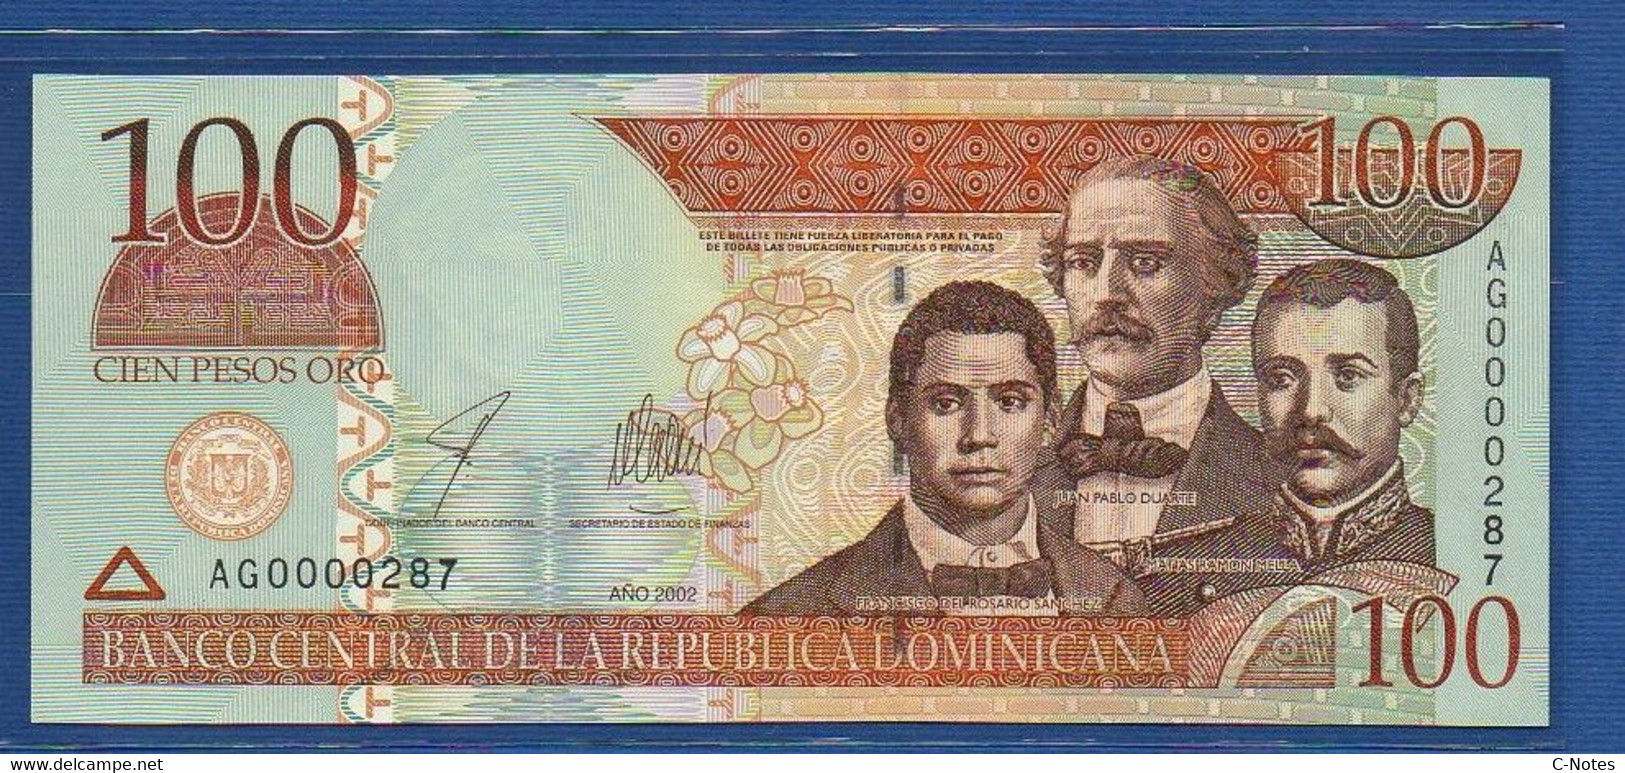 DOMINICAN REPUBLIC - P.175 – 100 Pesos Oro 2002 UNC, Serie AG 0000287 - Commemorative Issue - Low Serial Number - Dominikanische Rep.